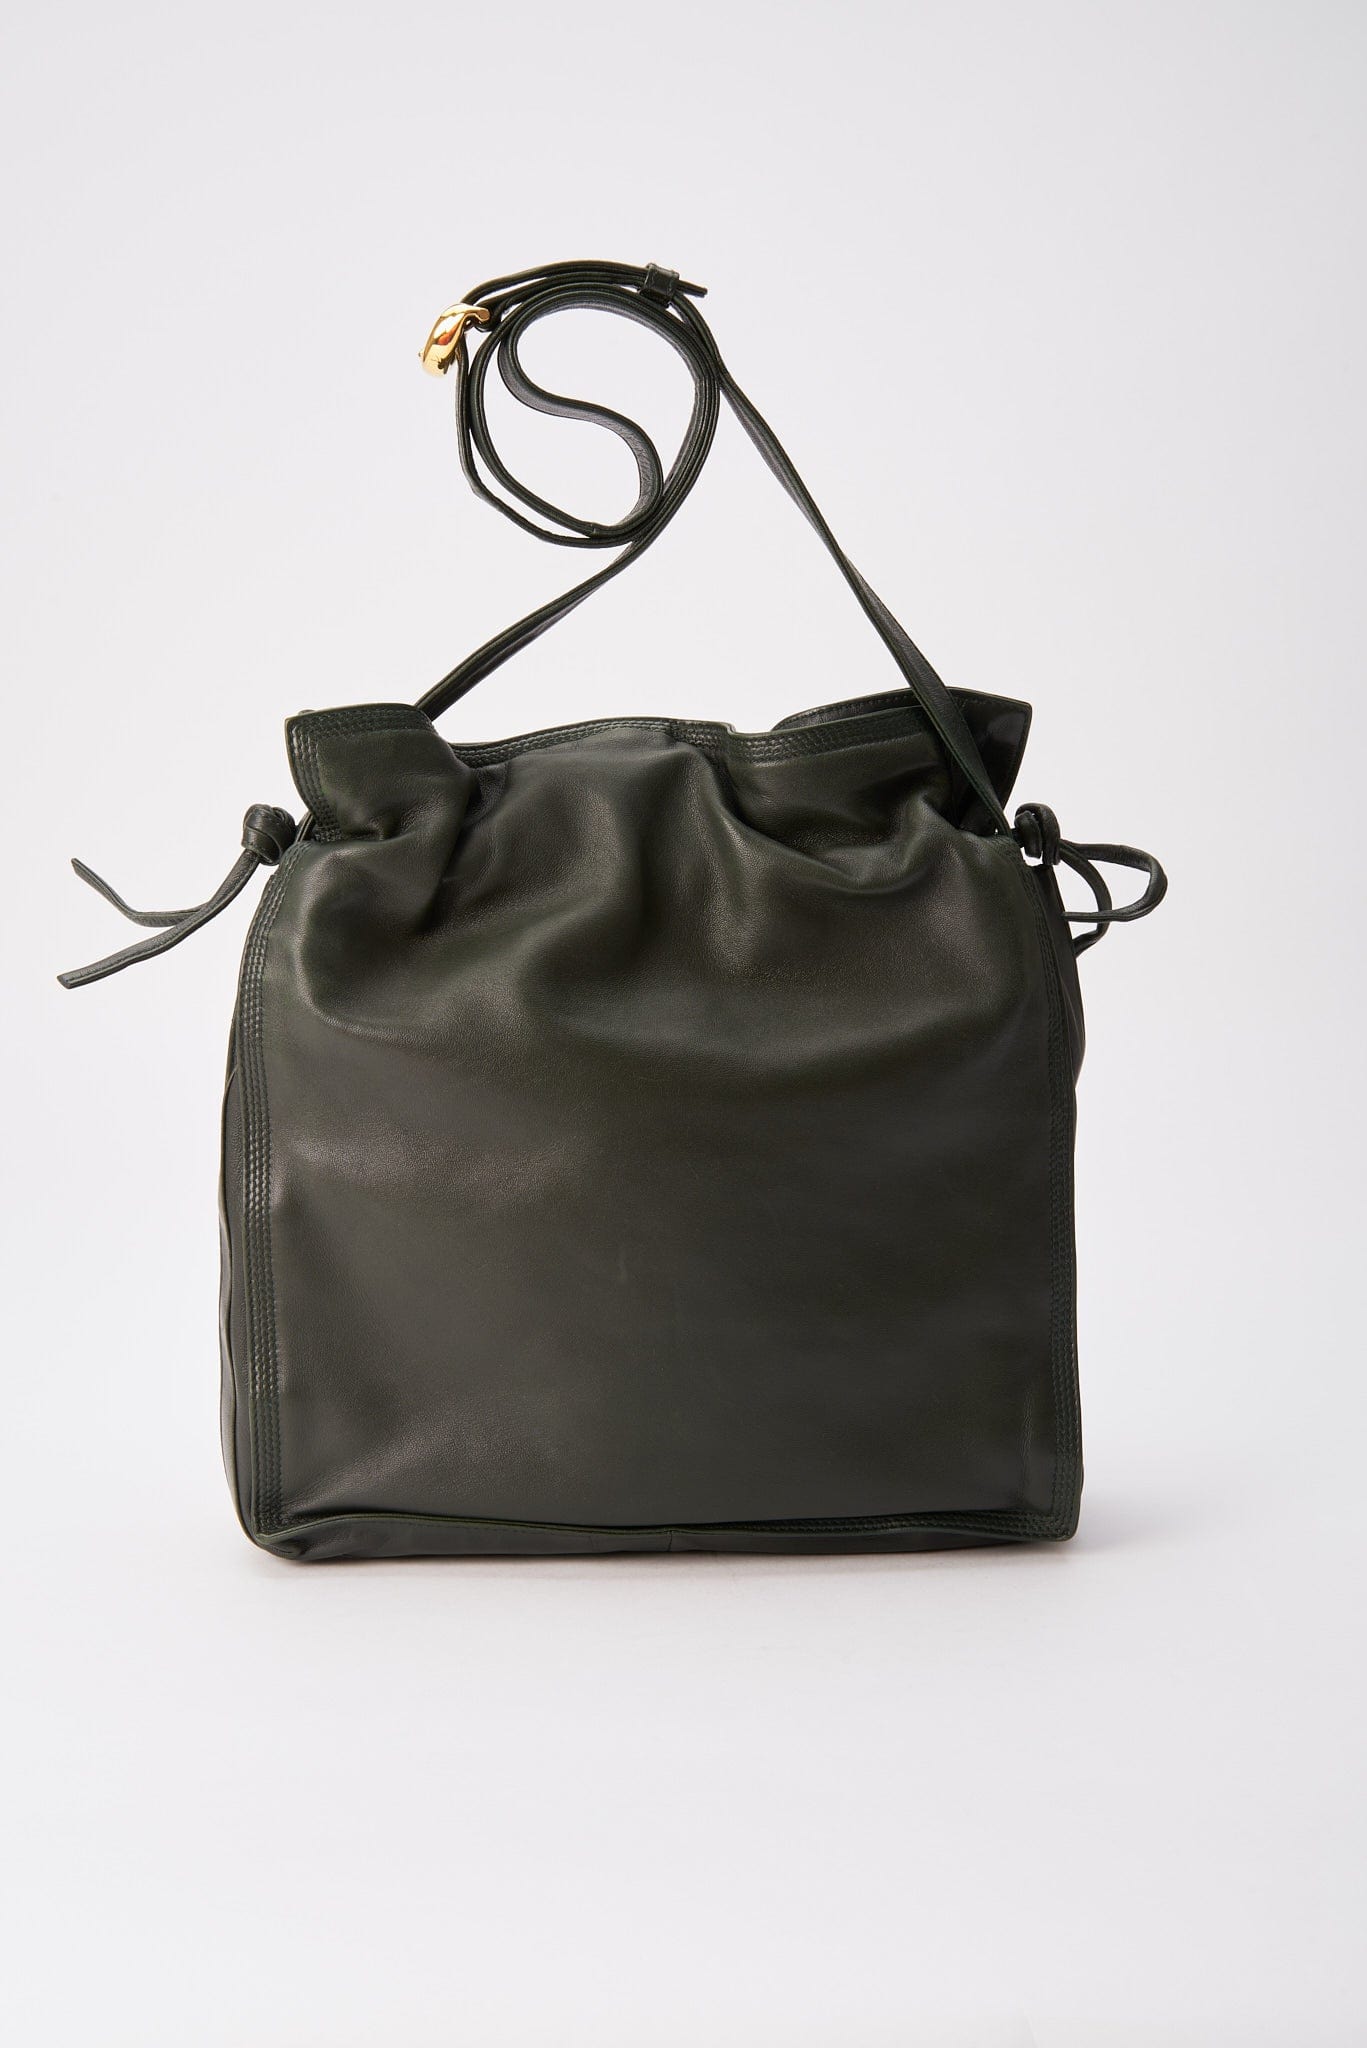 Vintage Loewe Green Leather Drawstring Tote Bag